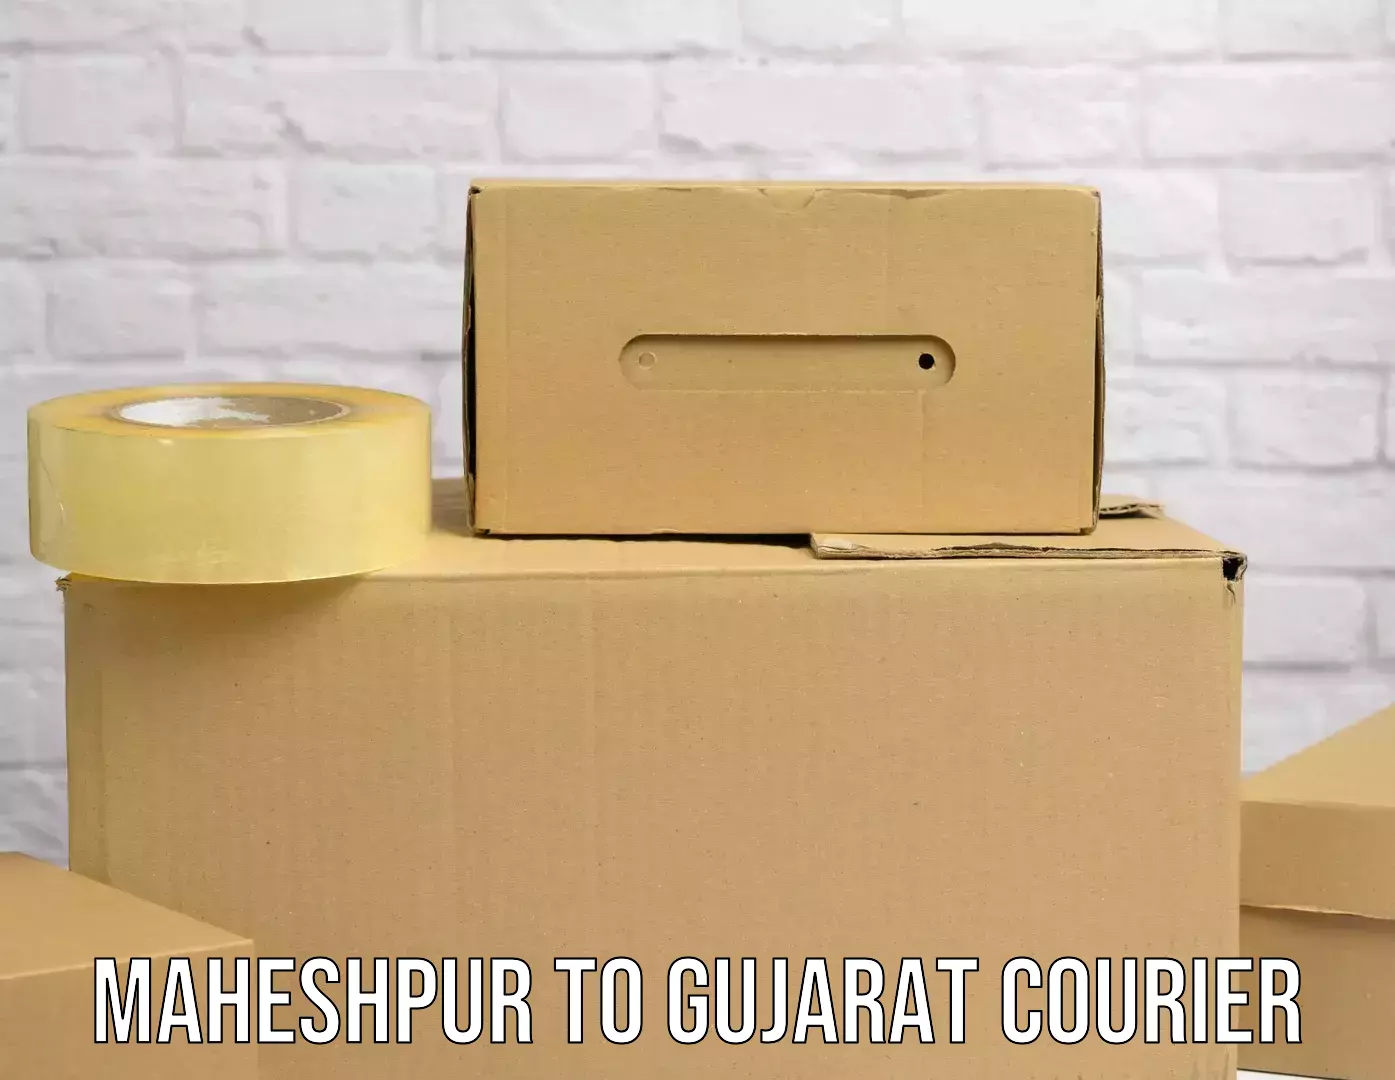 Advanced tracking systems Maheshpur to Gujarat